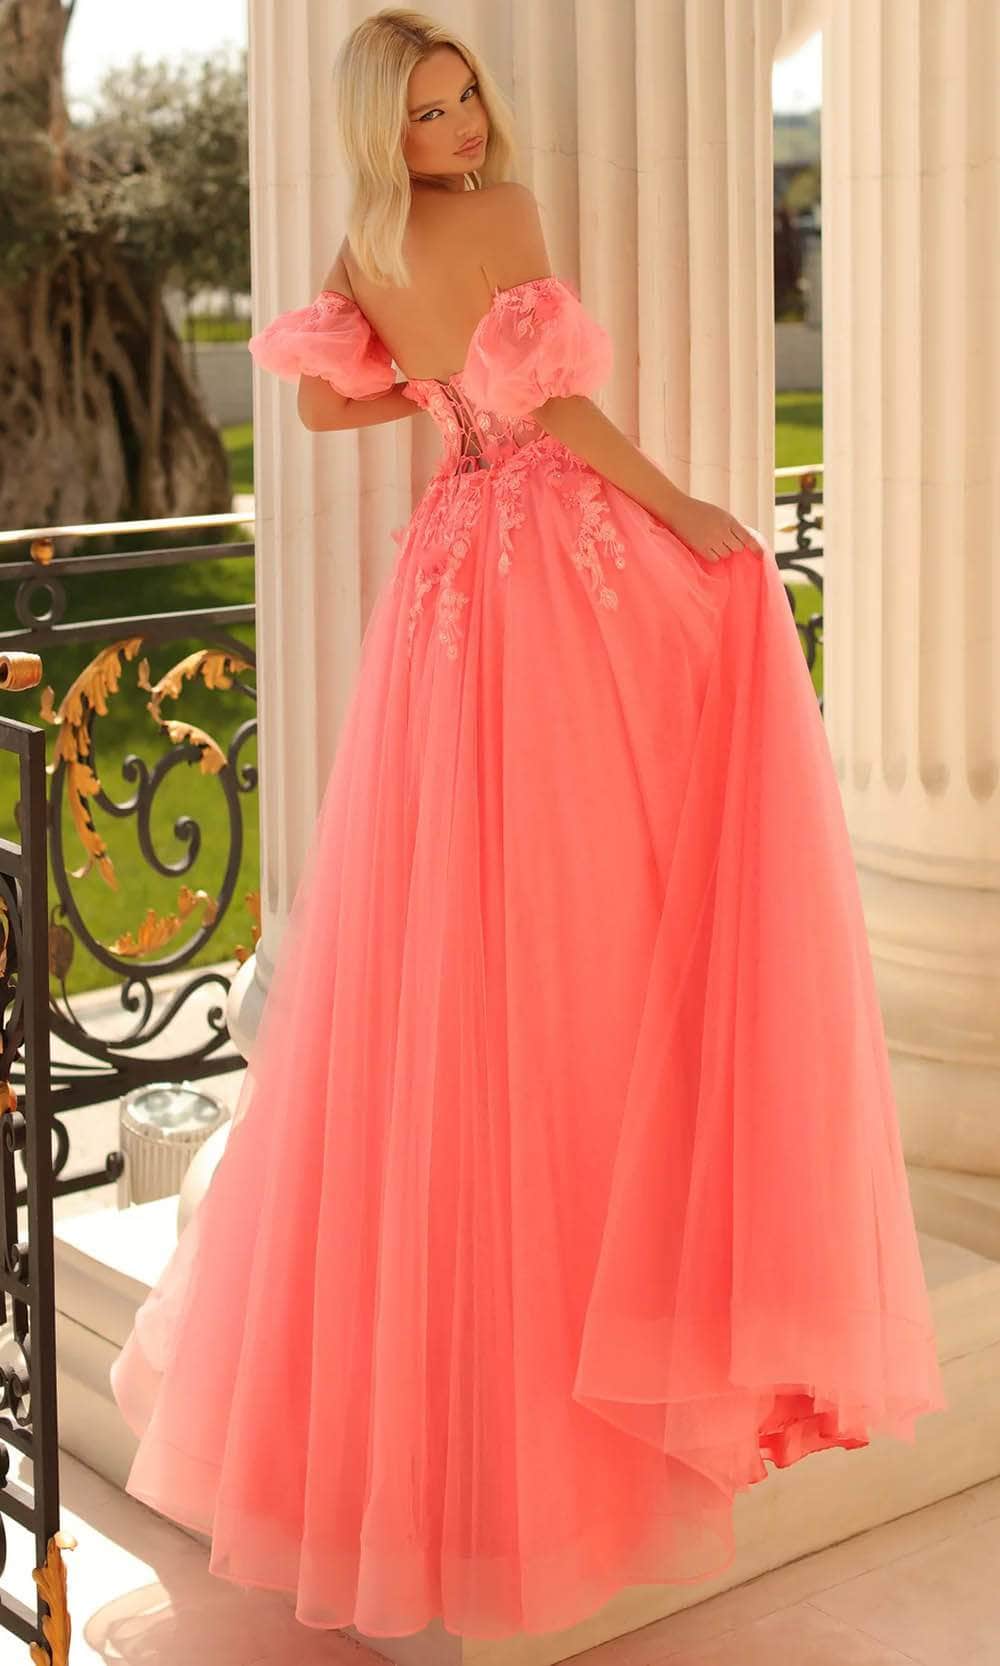 Clarisse 810721 - Applique Corset Prom Gown Special Occasion Dress